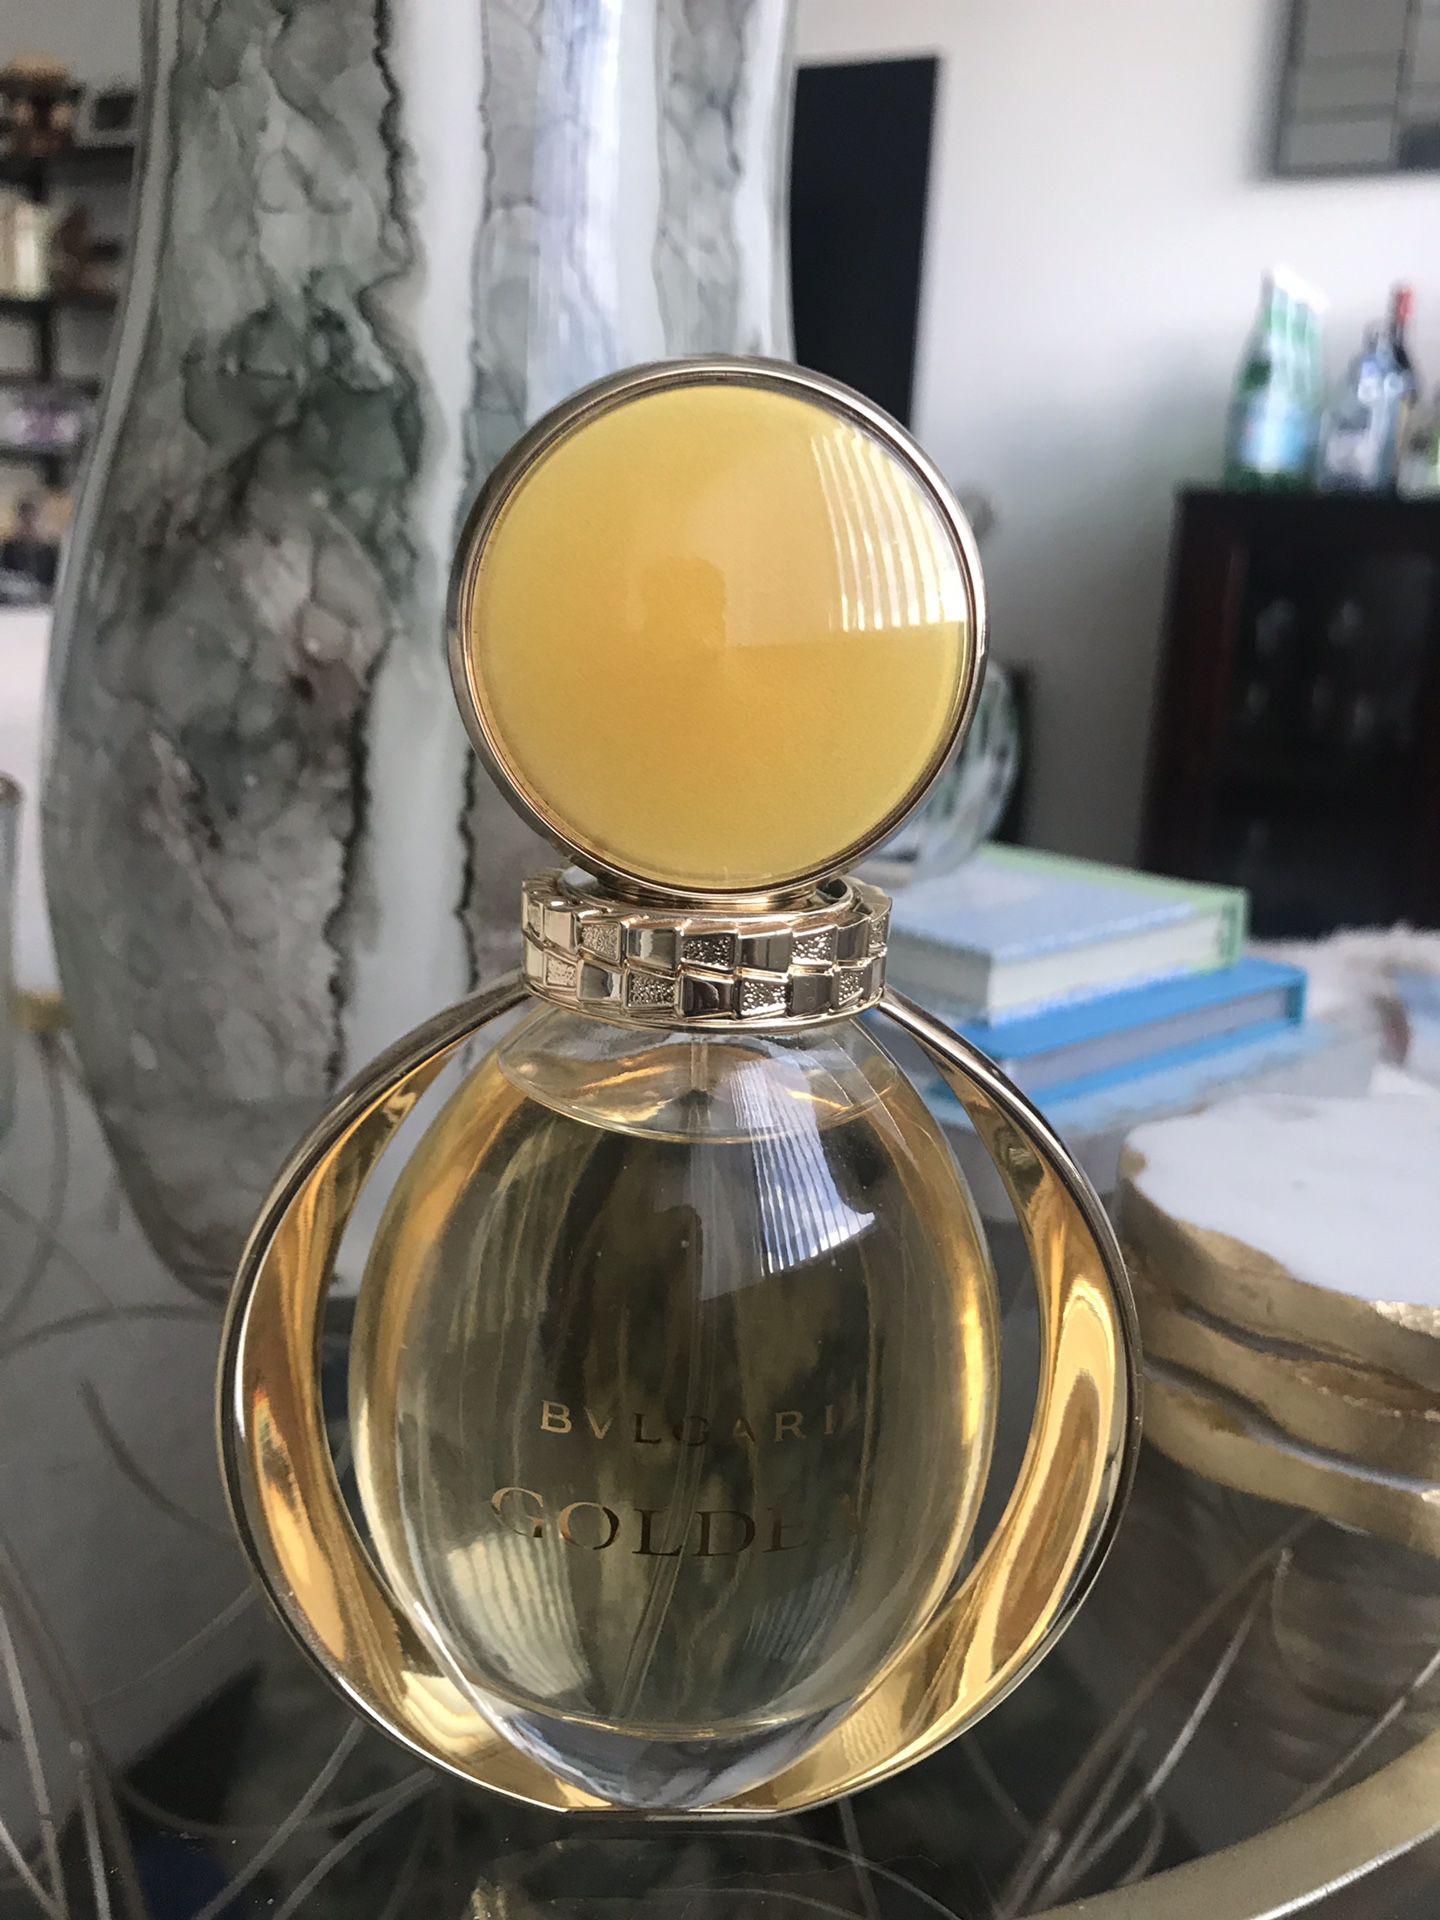 Bvlgari Goldea Eau de Parfum, 3.04 oz - $55